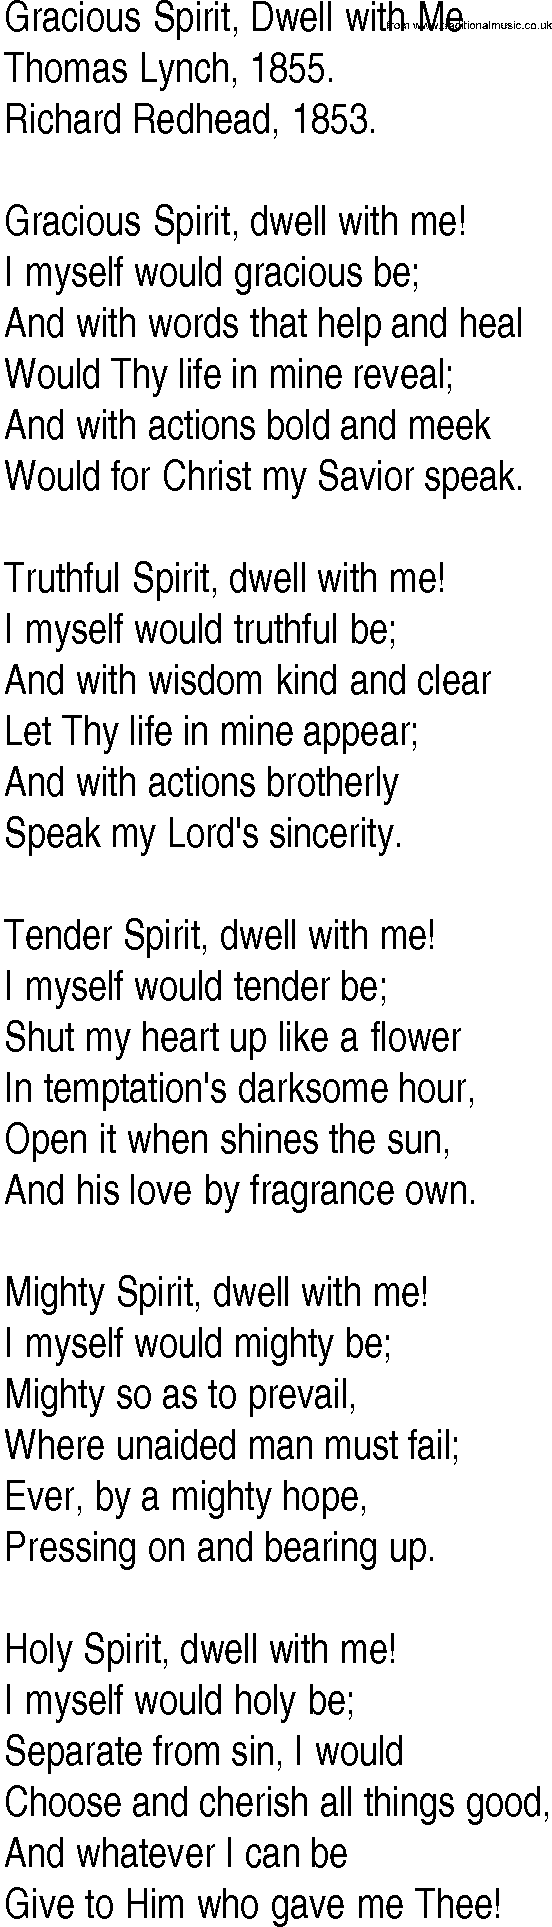 Hymn and Gospel Song: Gracious Spirit, Dwell with Me by Thomas Lynch lyrics